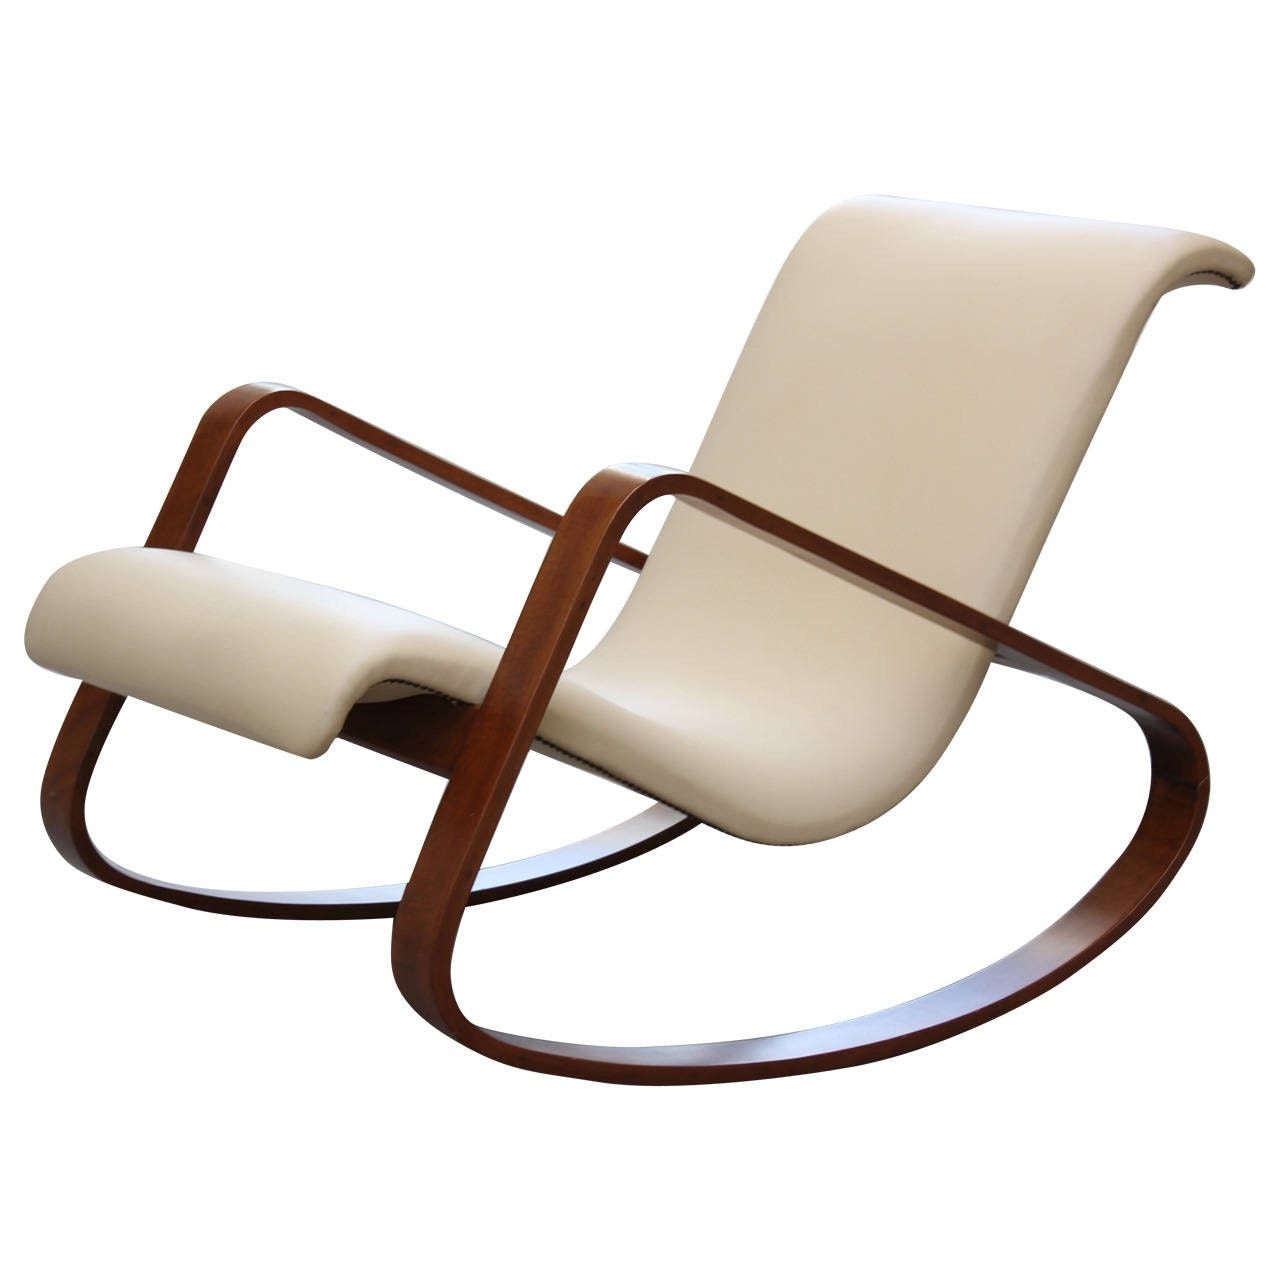 Leather rocker chair